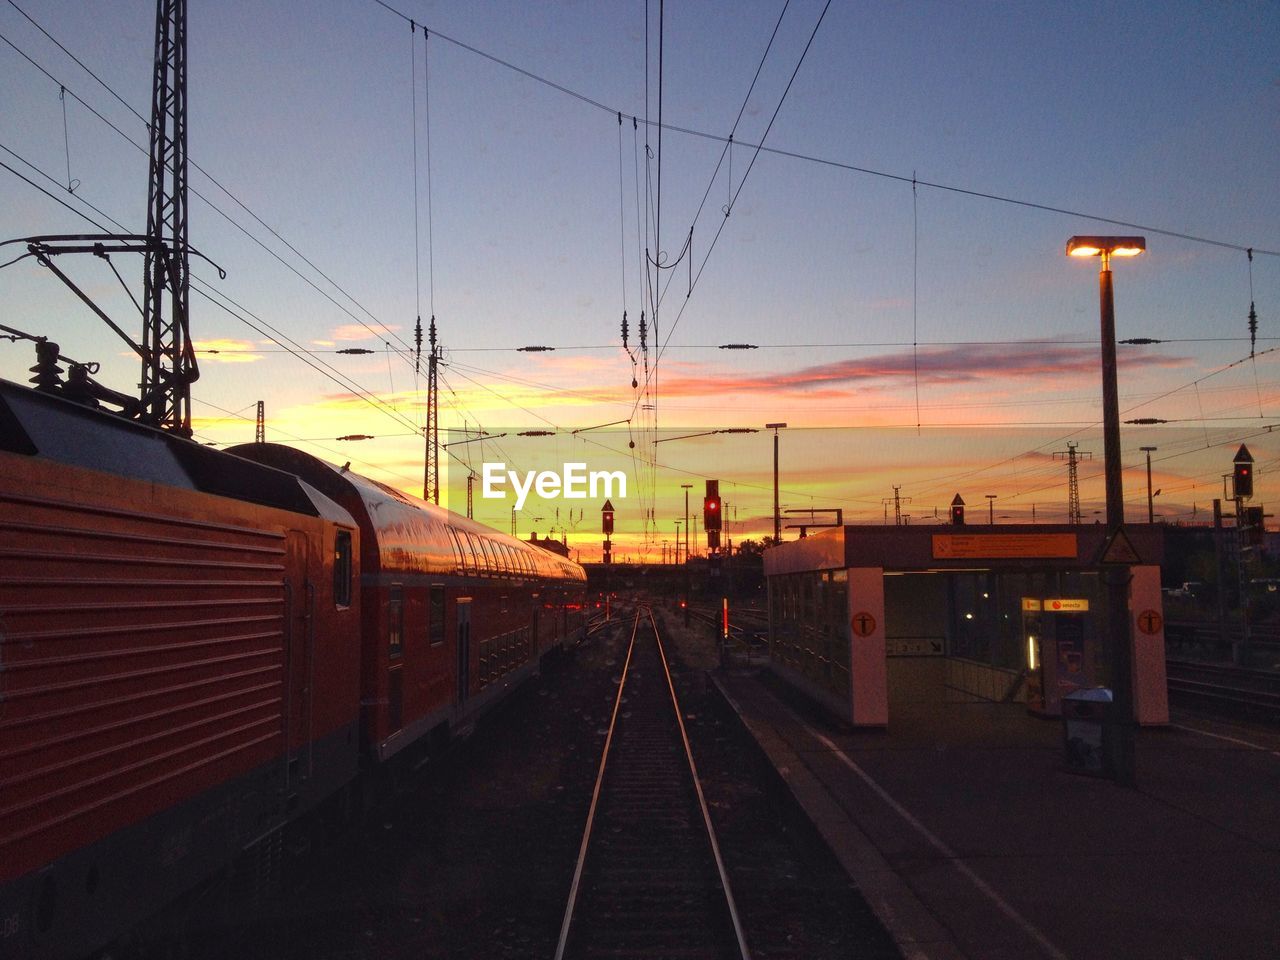 Train on railroad tracks during sunset